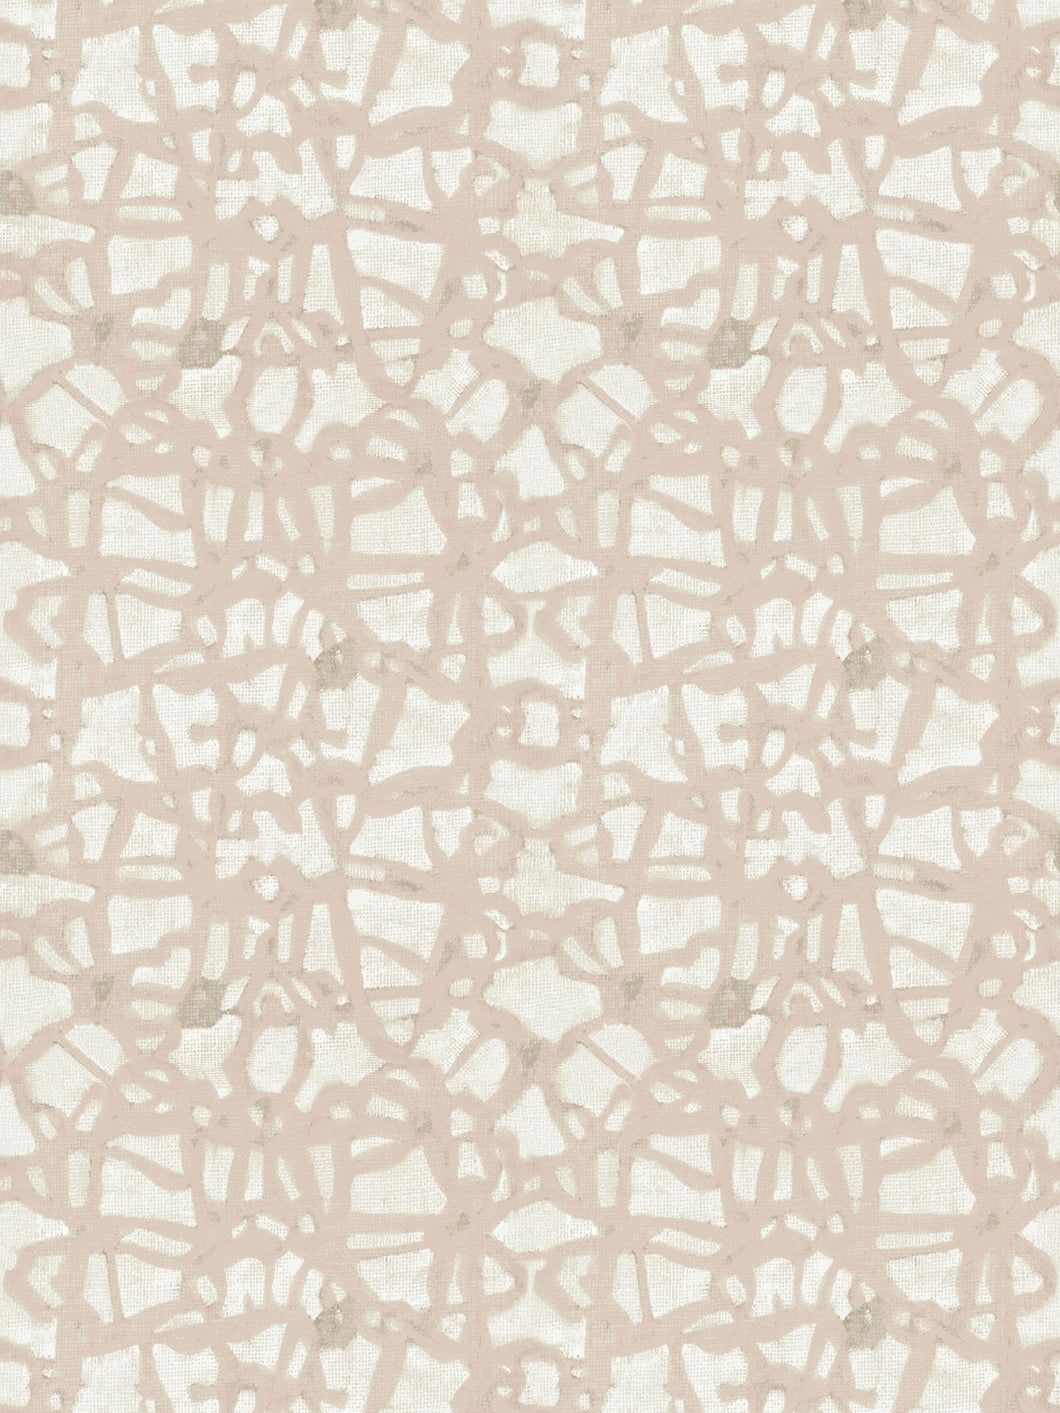 Dado Atelier plaster lineament wallpaper